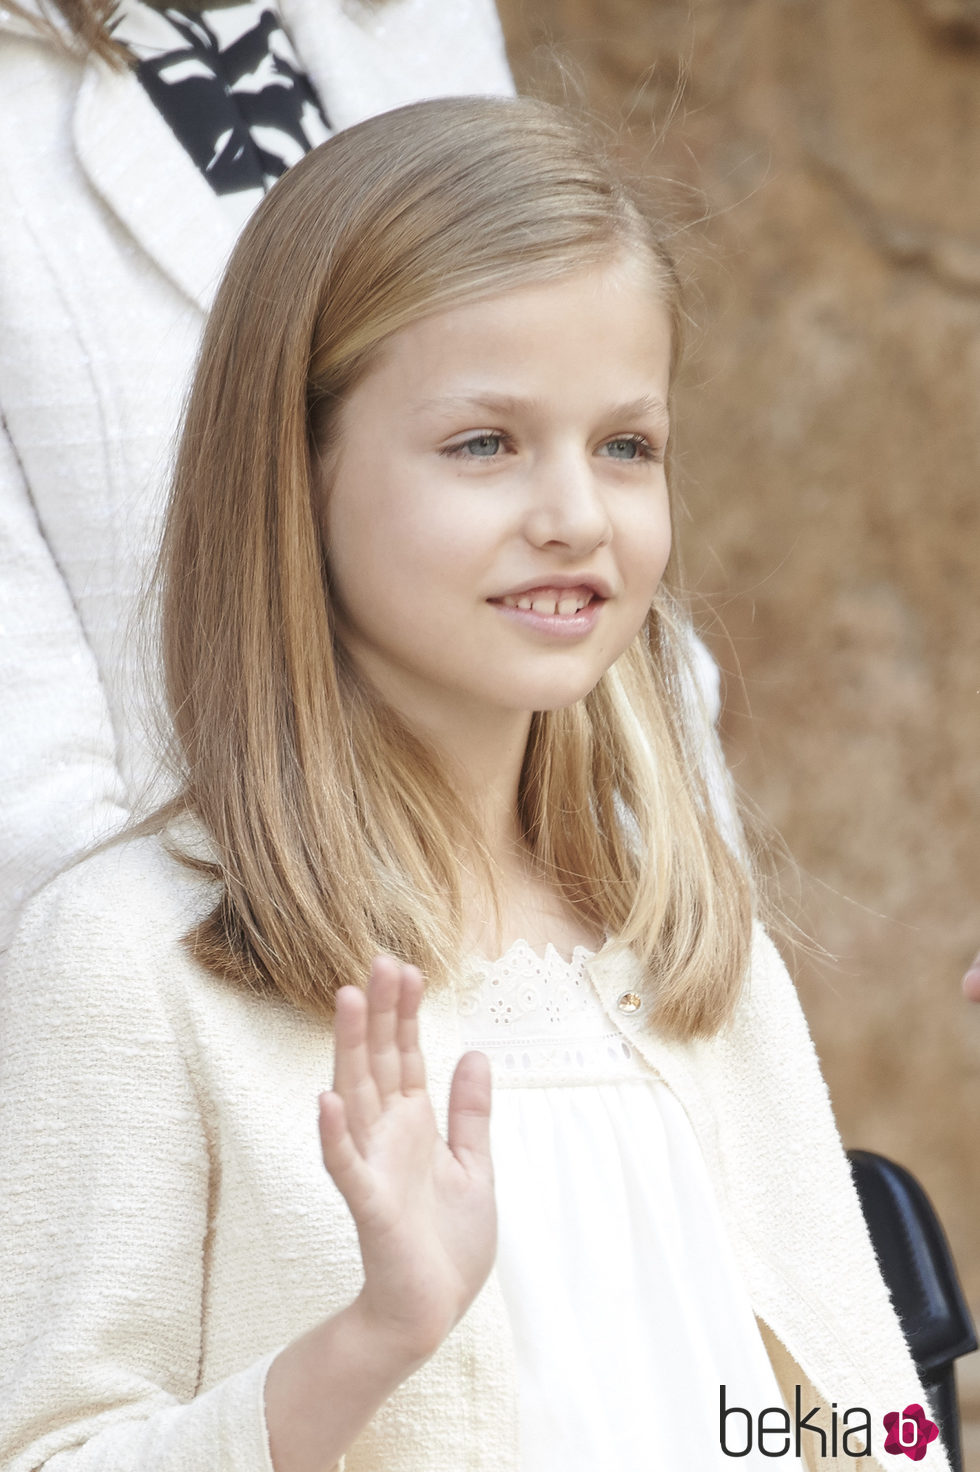 La Princesa Leonor saludando en la Misa de Pascua 2015 en Palma de Mallorca